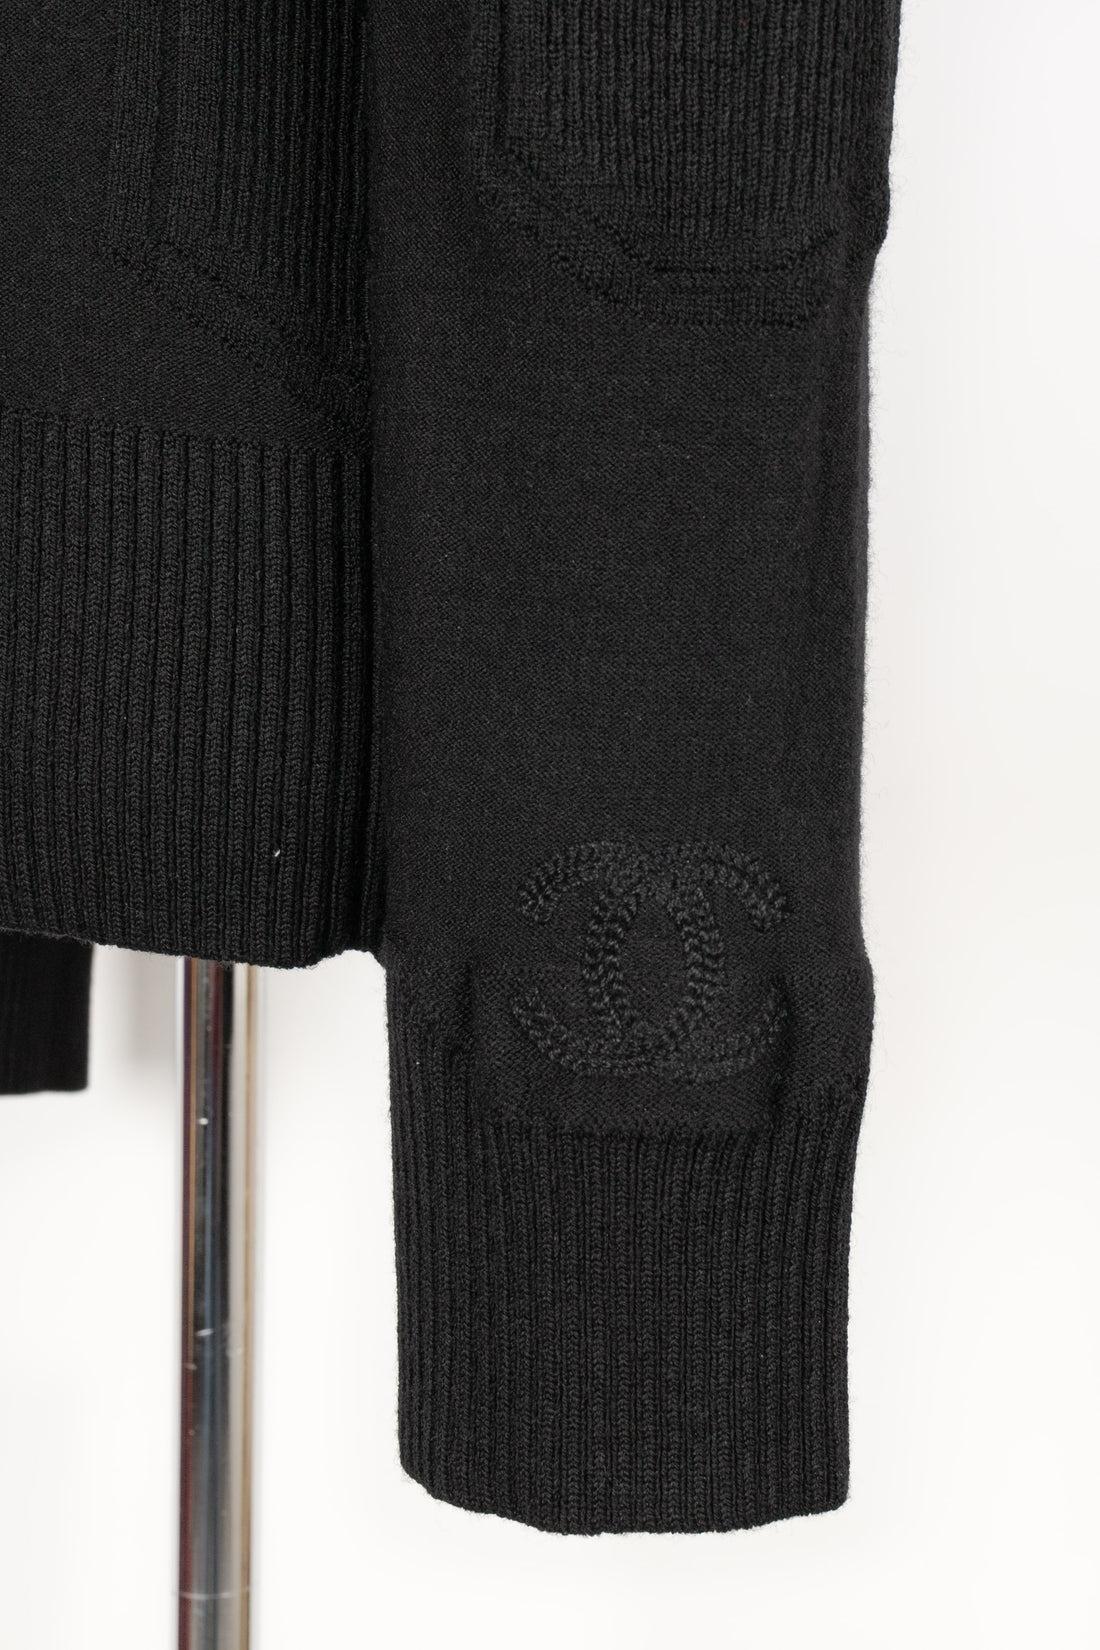 Chanel Black Pullover in Black Wool Turtleneck  For Sale 1